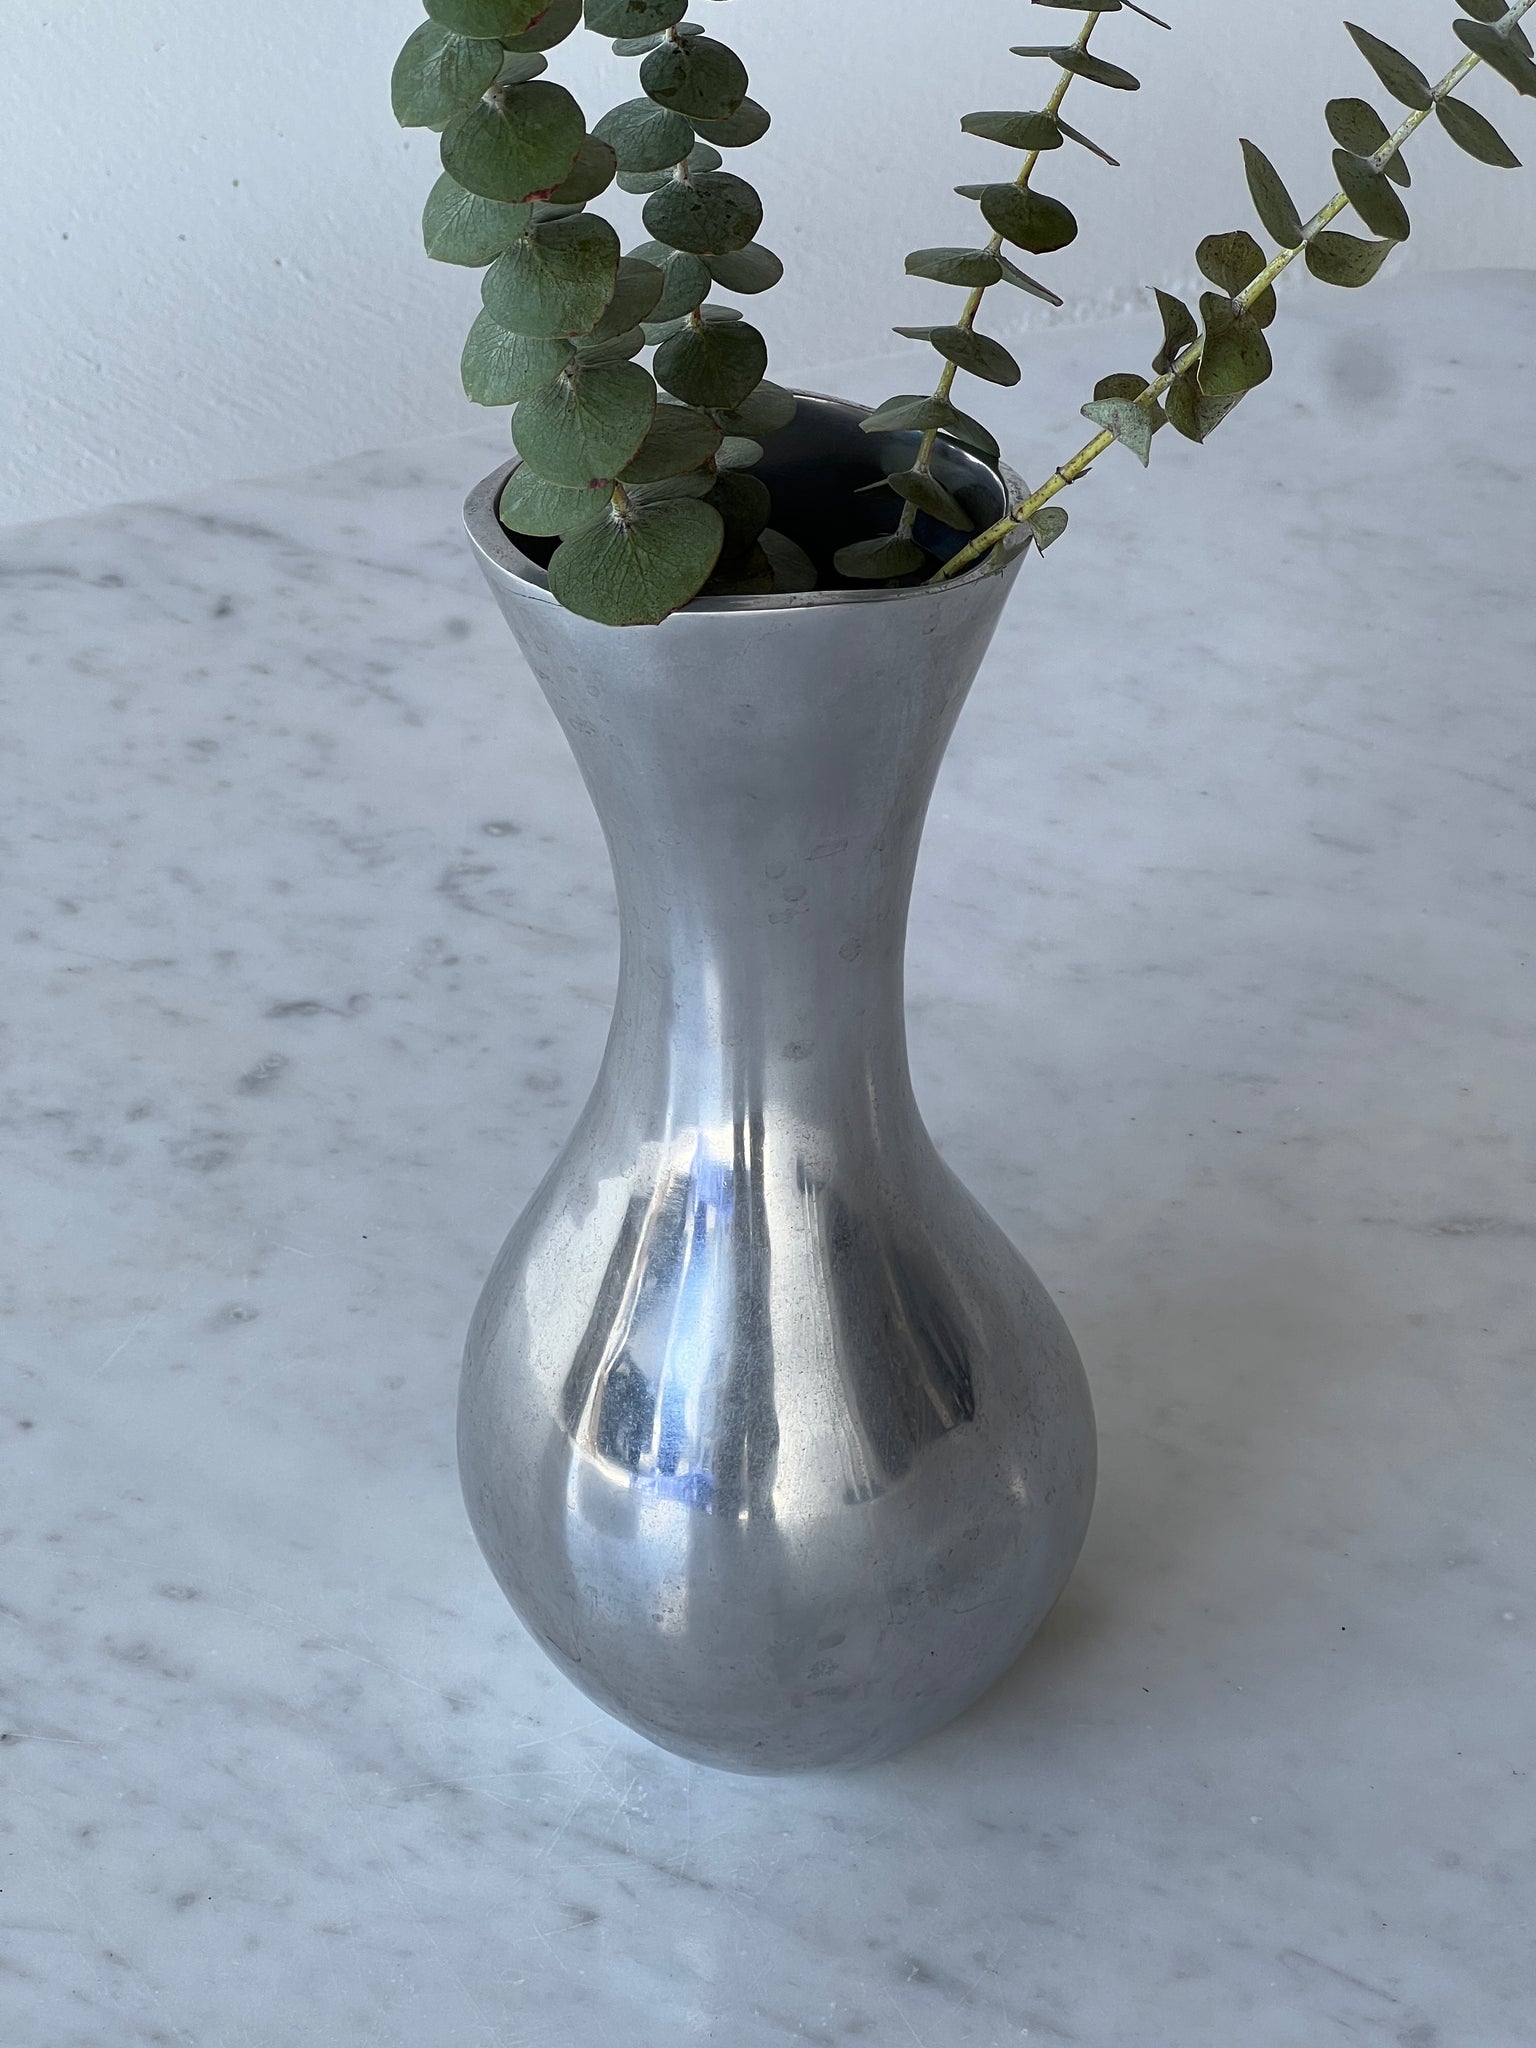 Stainless Steel Vase